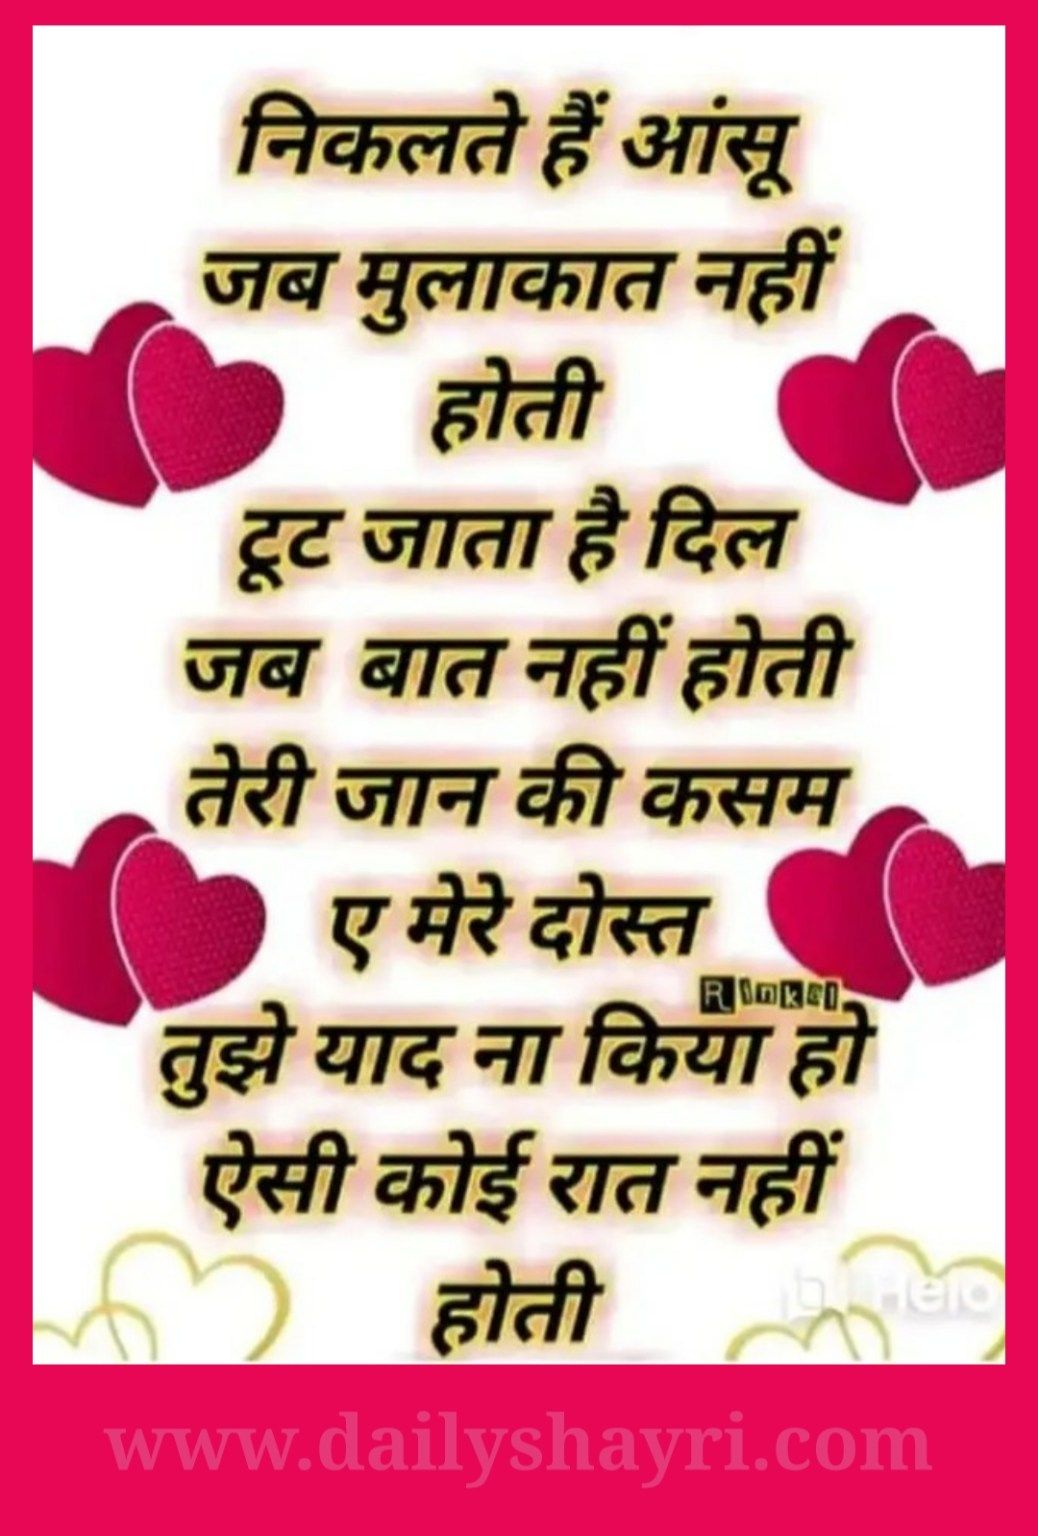 2020 Dosti Shayari Images - Hindi Shayari Love Shayari Love Quotes Hd ...